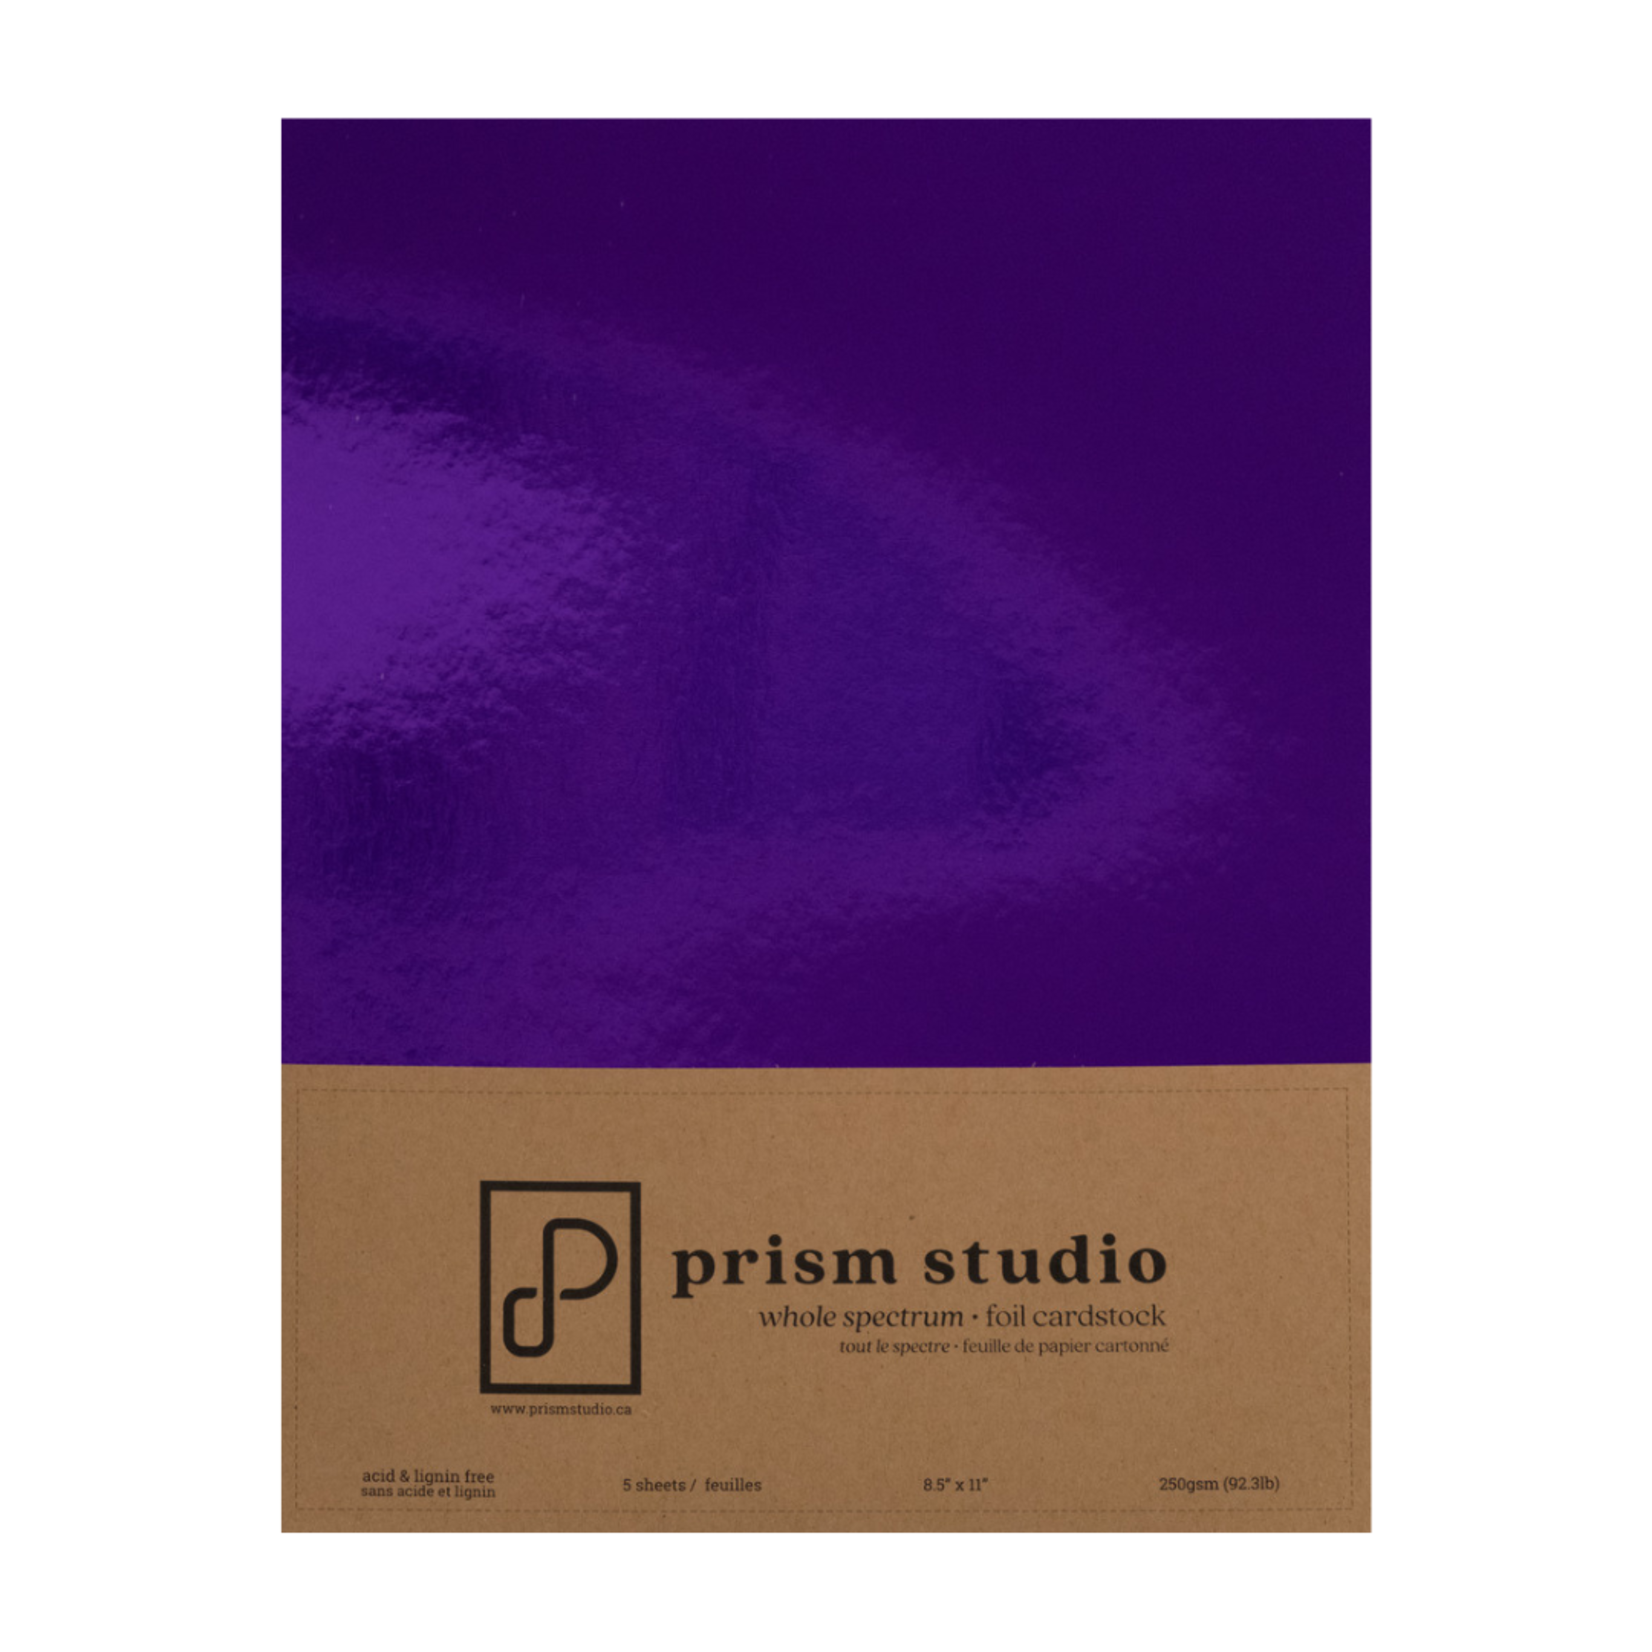 PRISM STUDIO PRISM STUDIO WHOLE SPECTRUM FOIL CARDSTOCK 8.5X11 AMETHYST